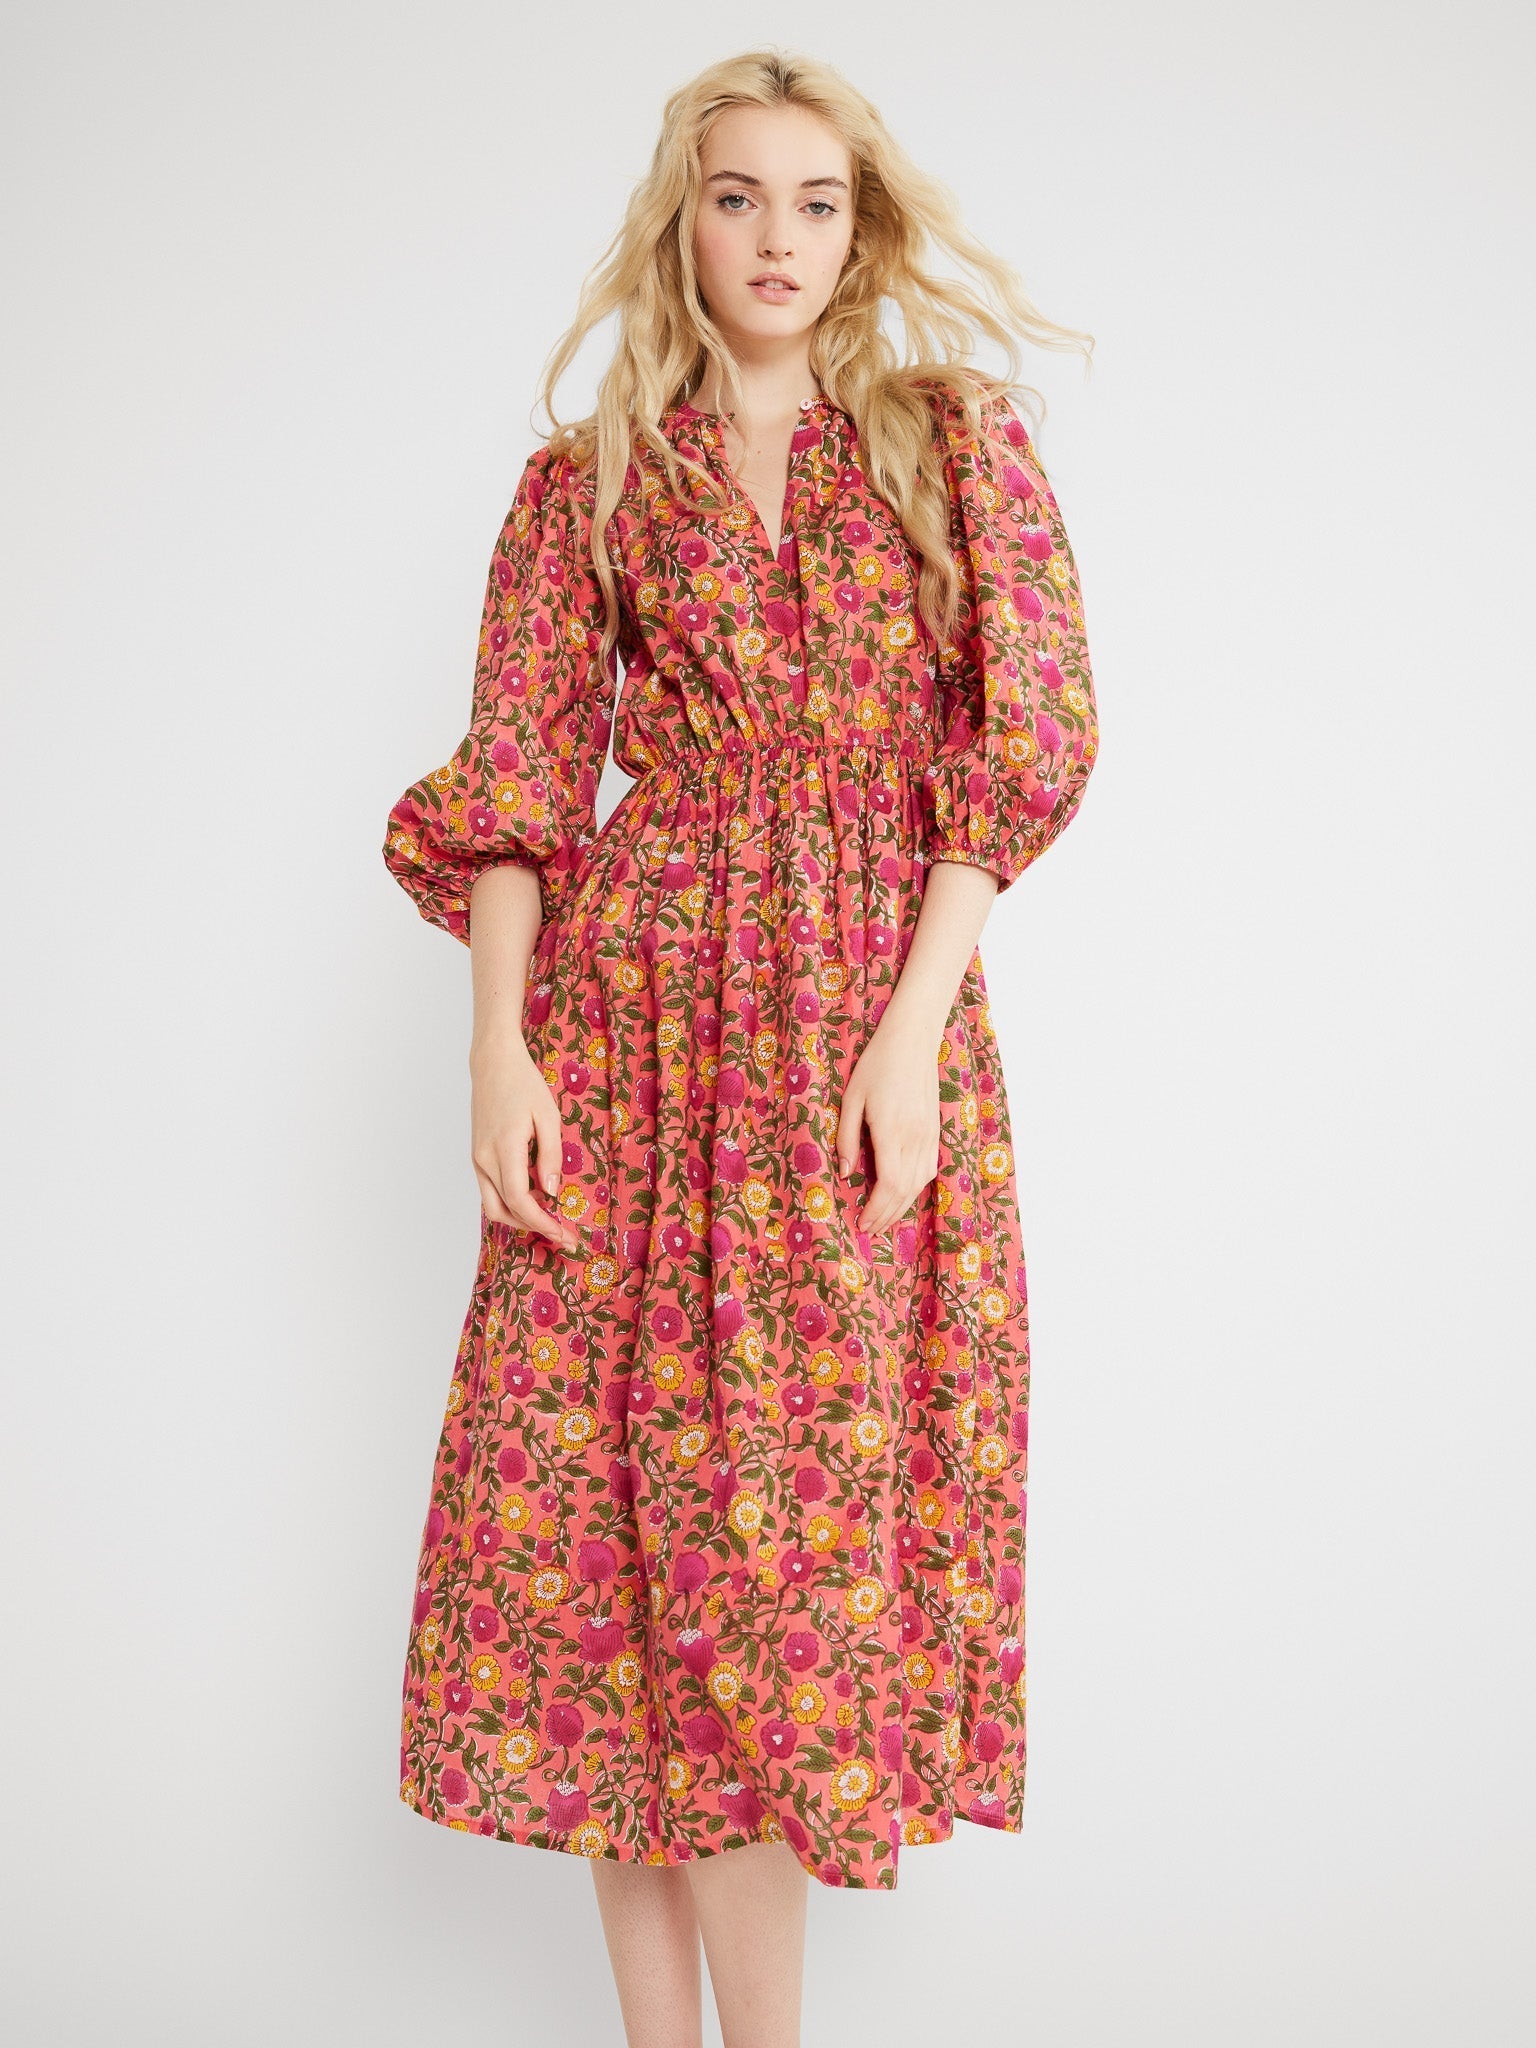 MILLE Clothing Celeste Dress in Passionfruit